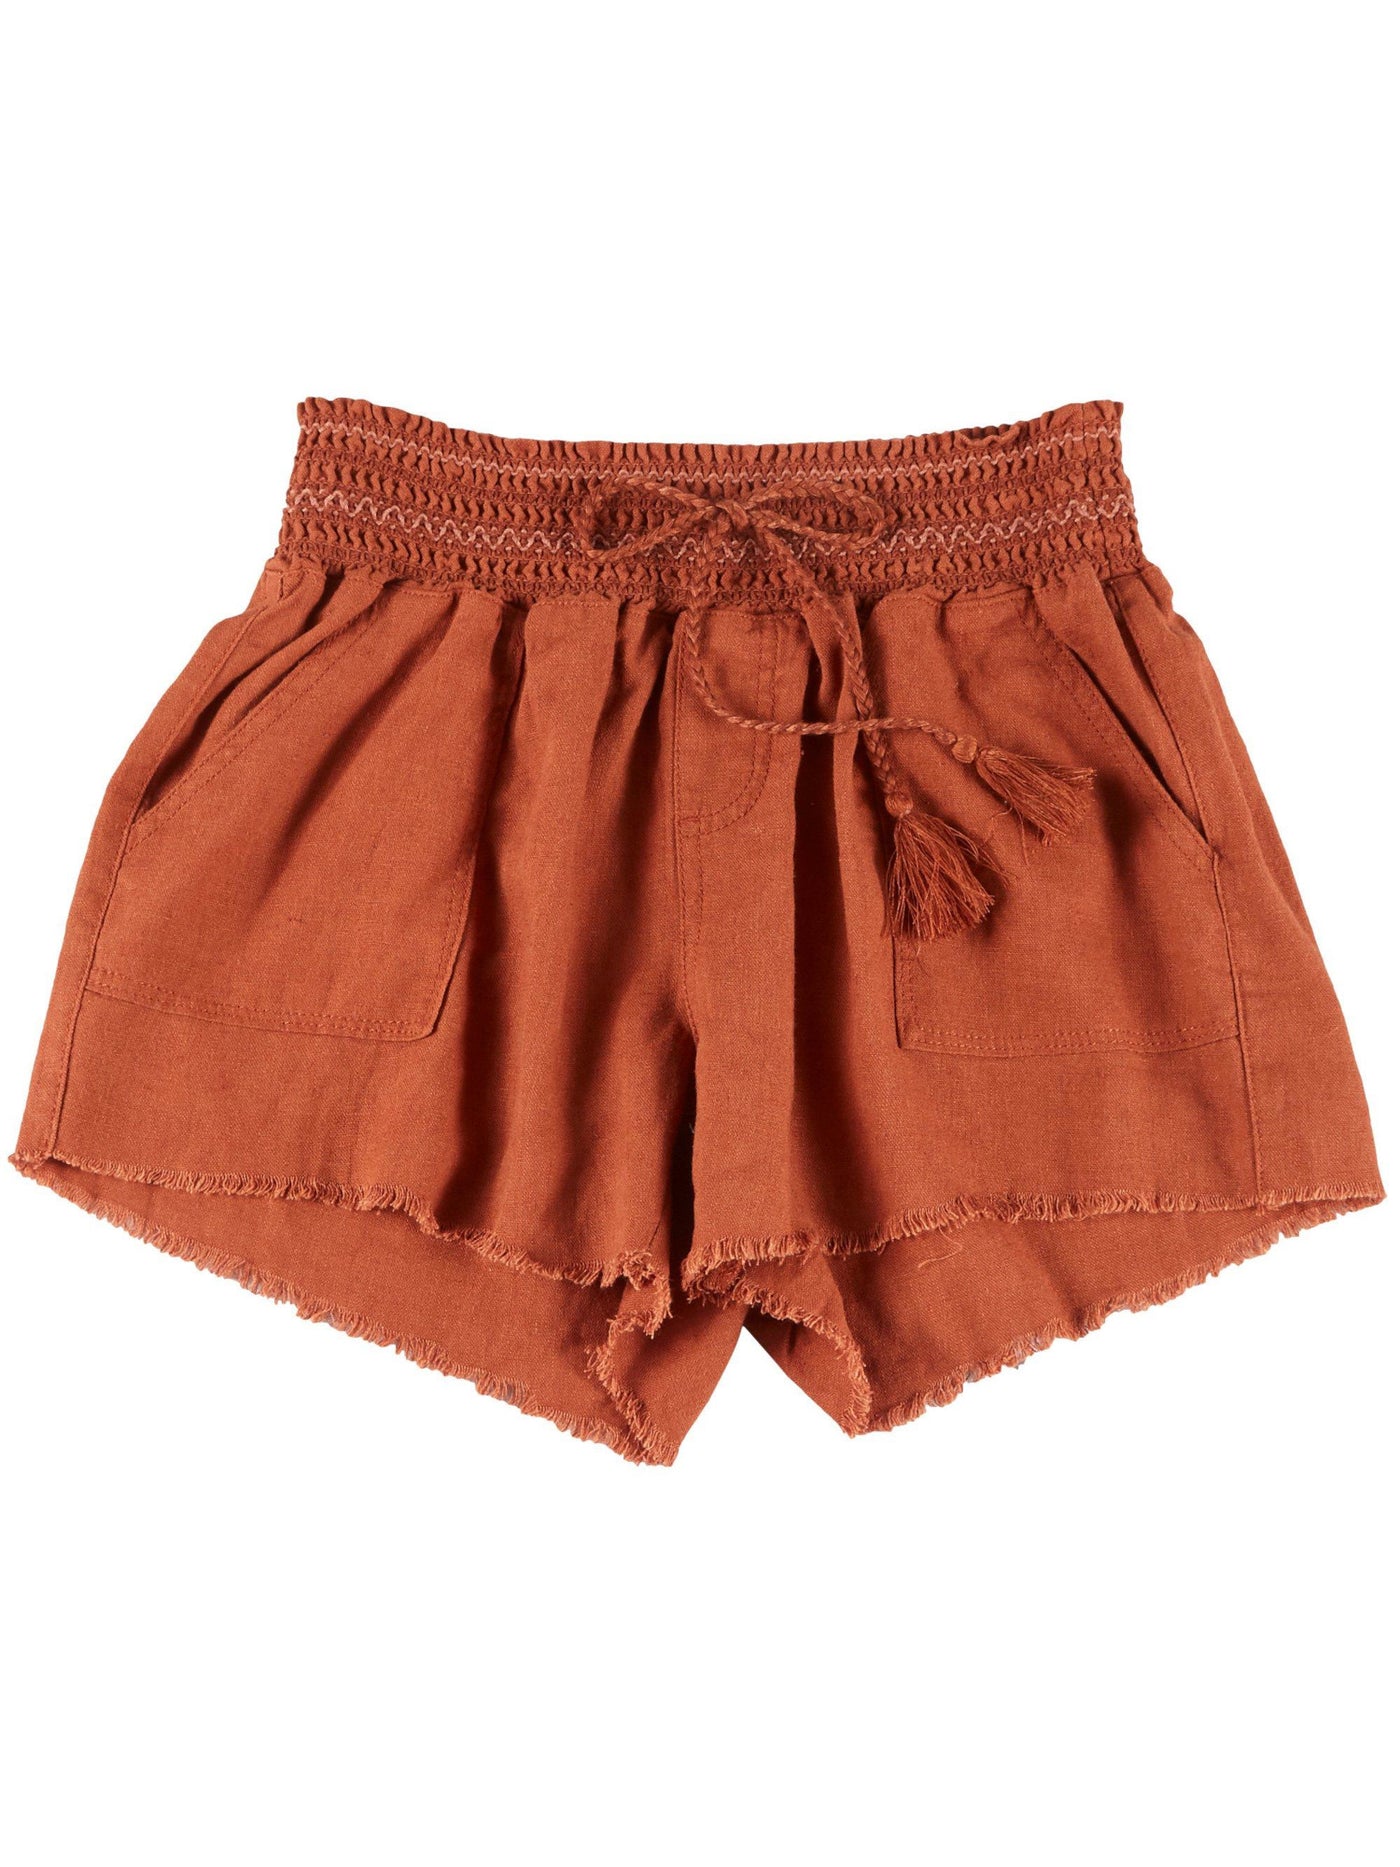 AMERICAN REWASH ORIGINAL BRAND Womens Brown Smocked Pocketed Tie Detail Frayed Hem Lounge Shorts Shorts Juniors M